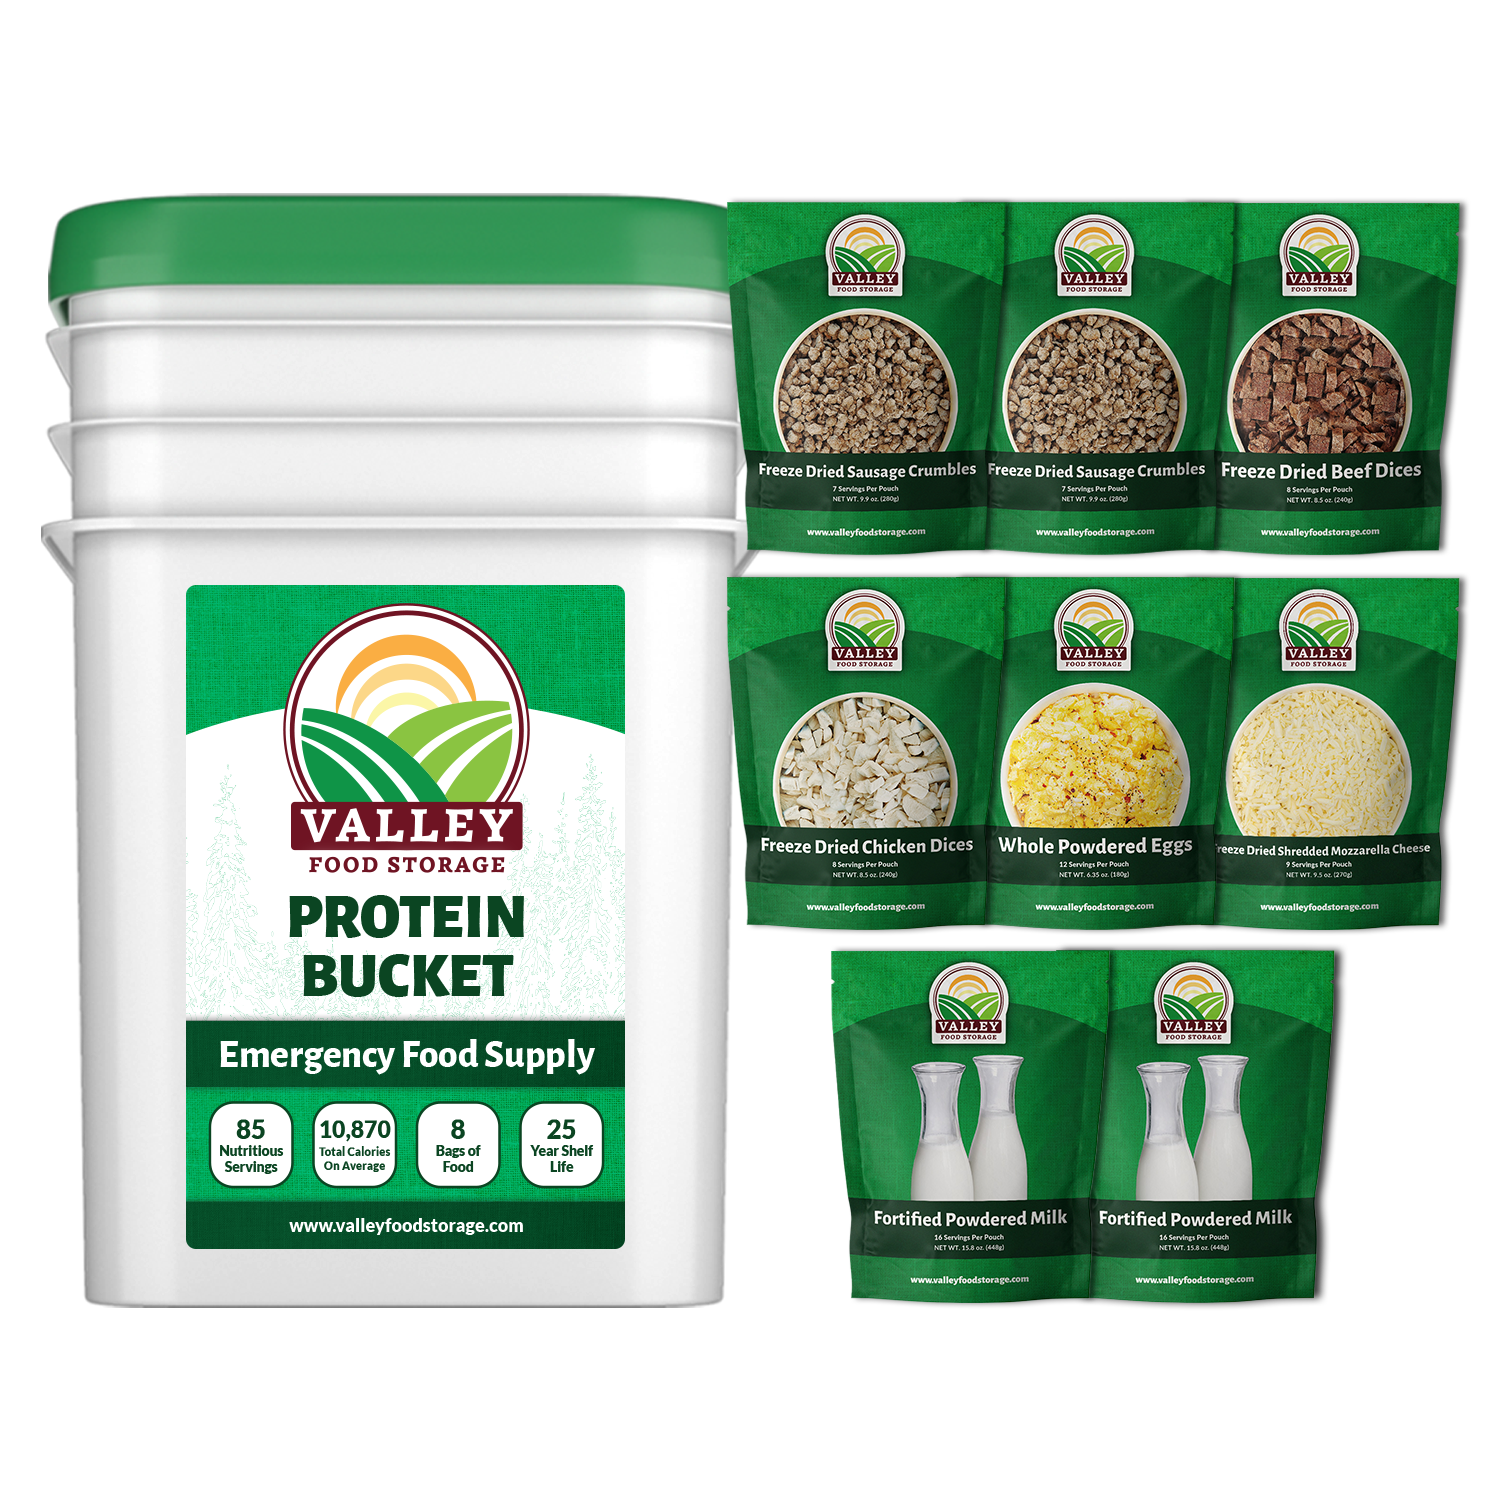 Protein Bucket From Valley Food Storage